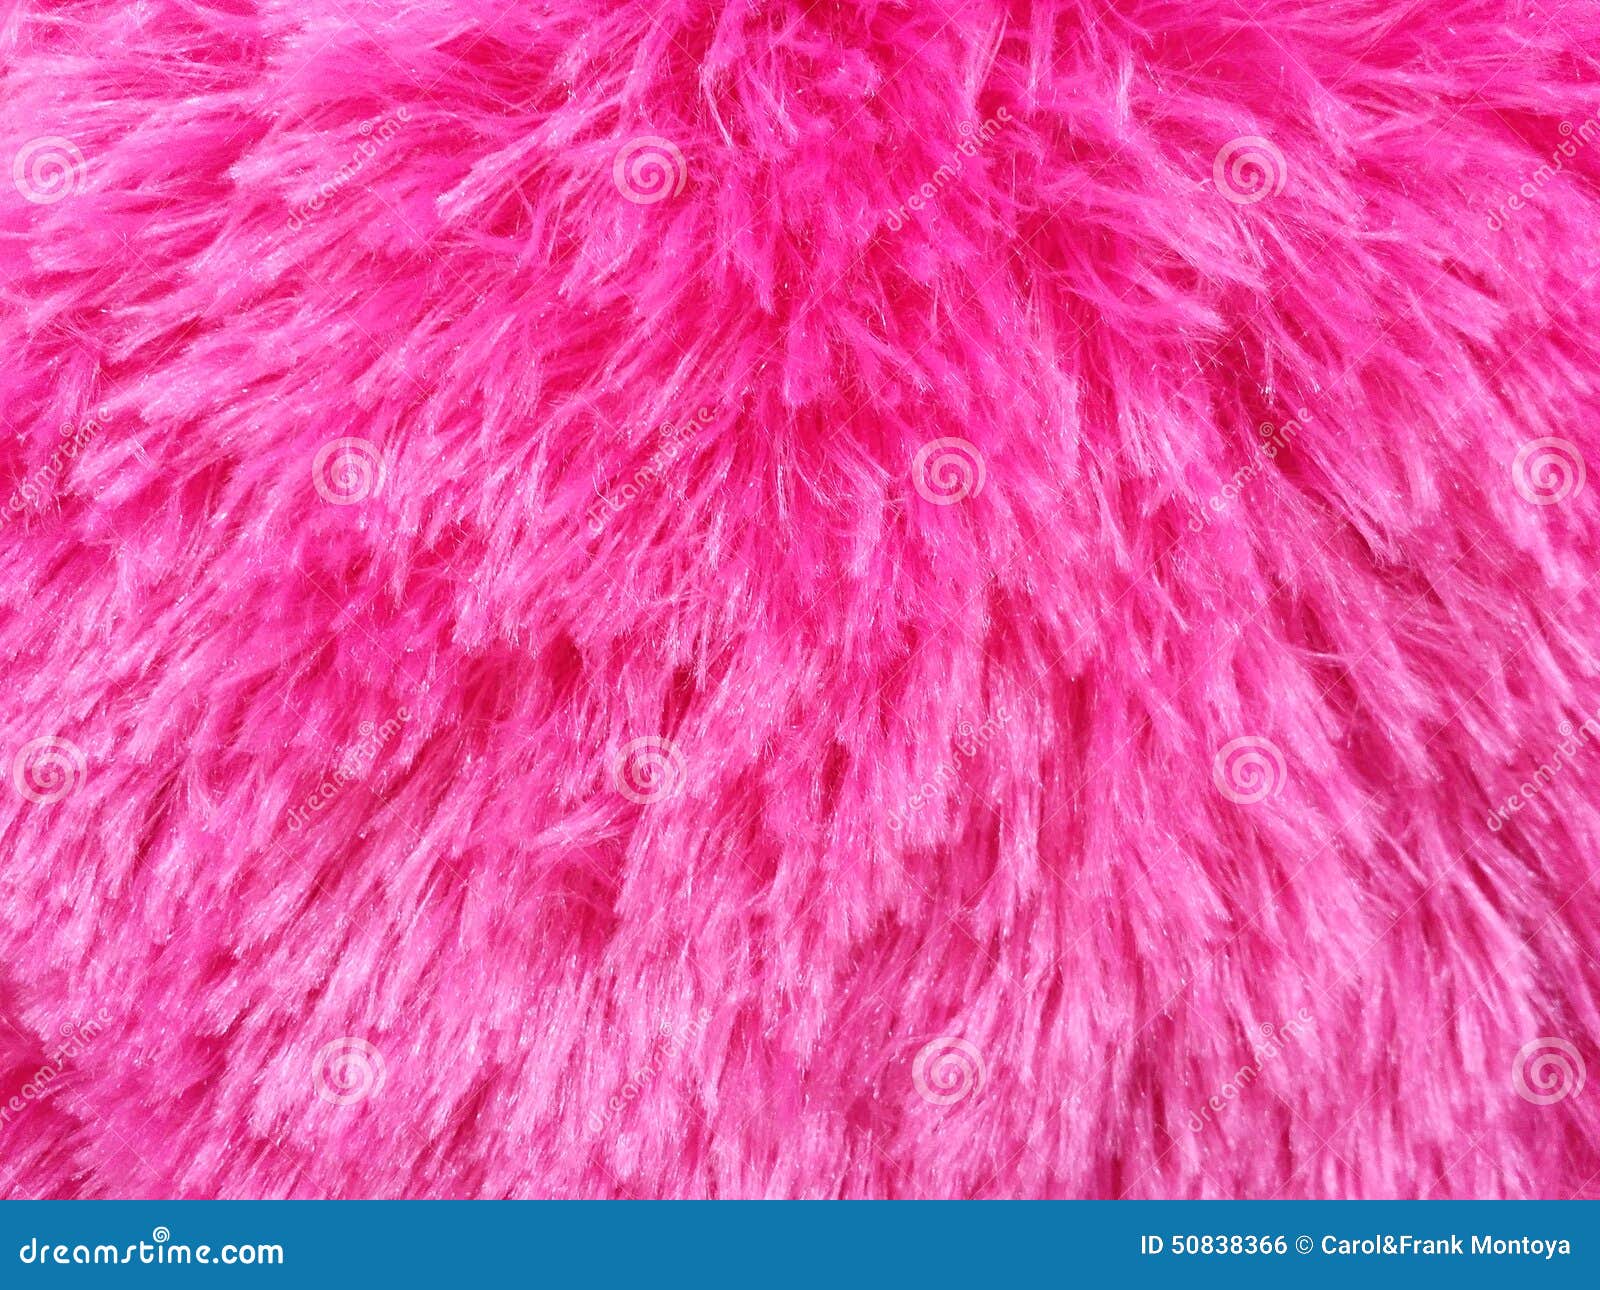 Fuzzy Pink Rug Roselawnlutheran HD Wallpapers Download Free Map Images Wallpaper [wallpaper376.blogspot.com]